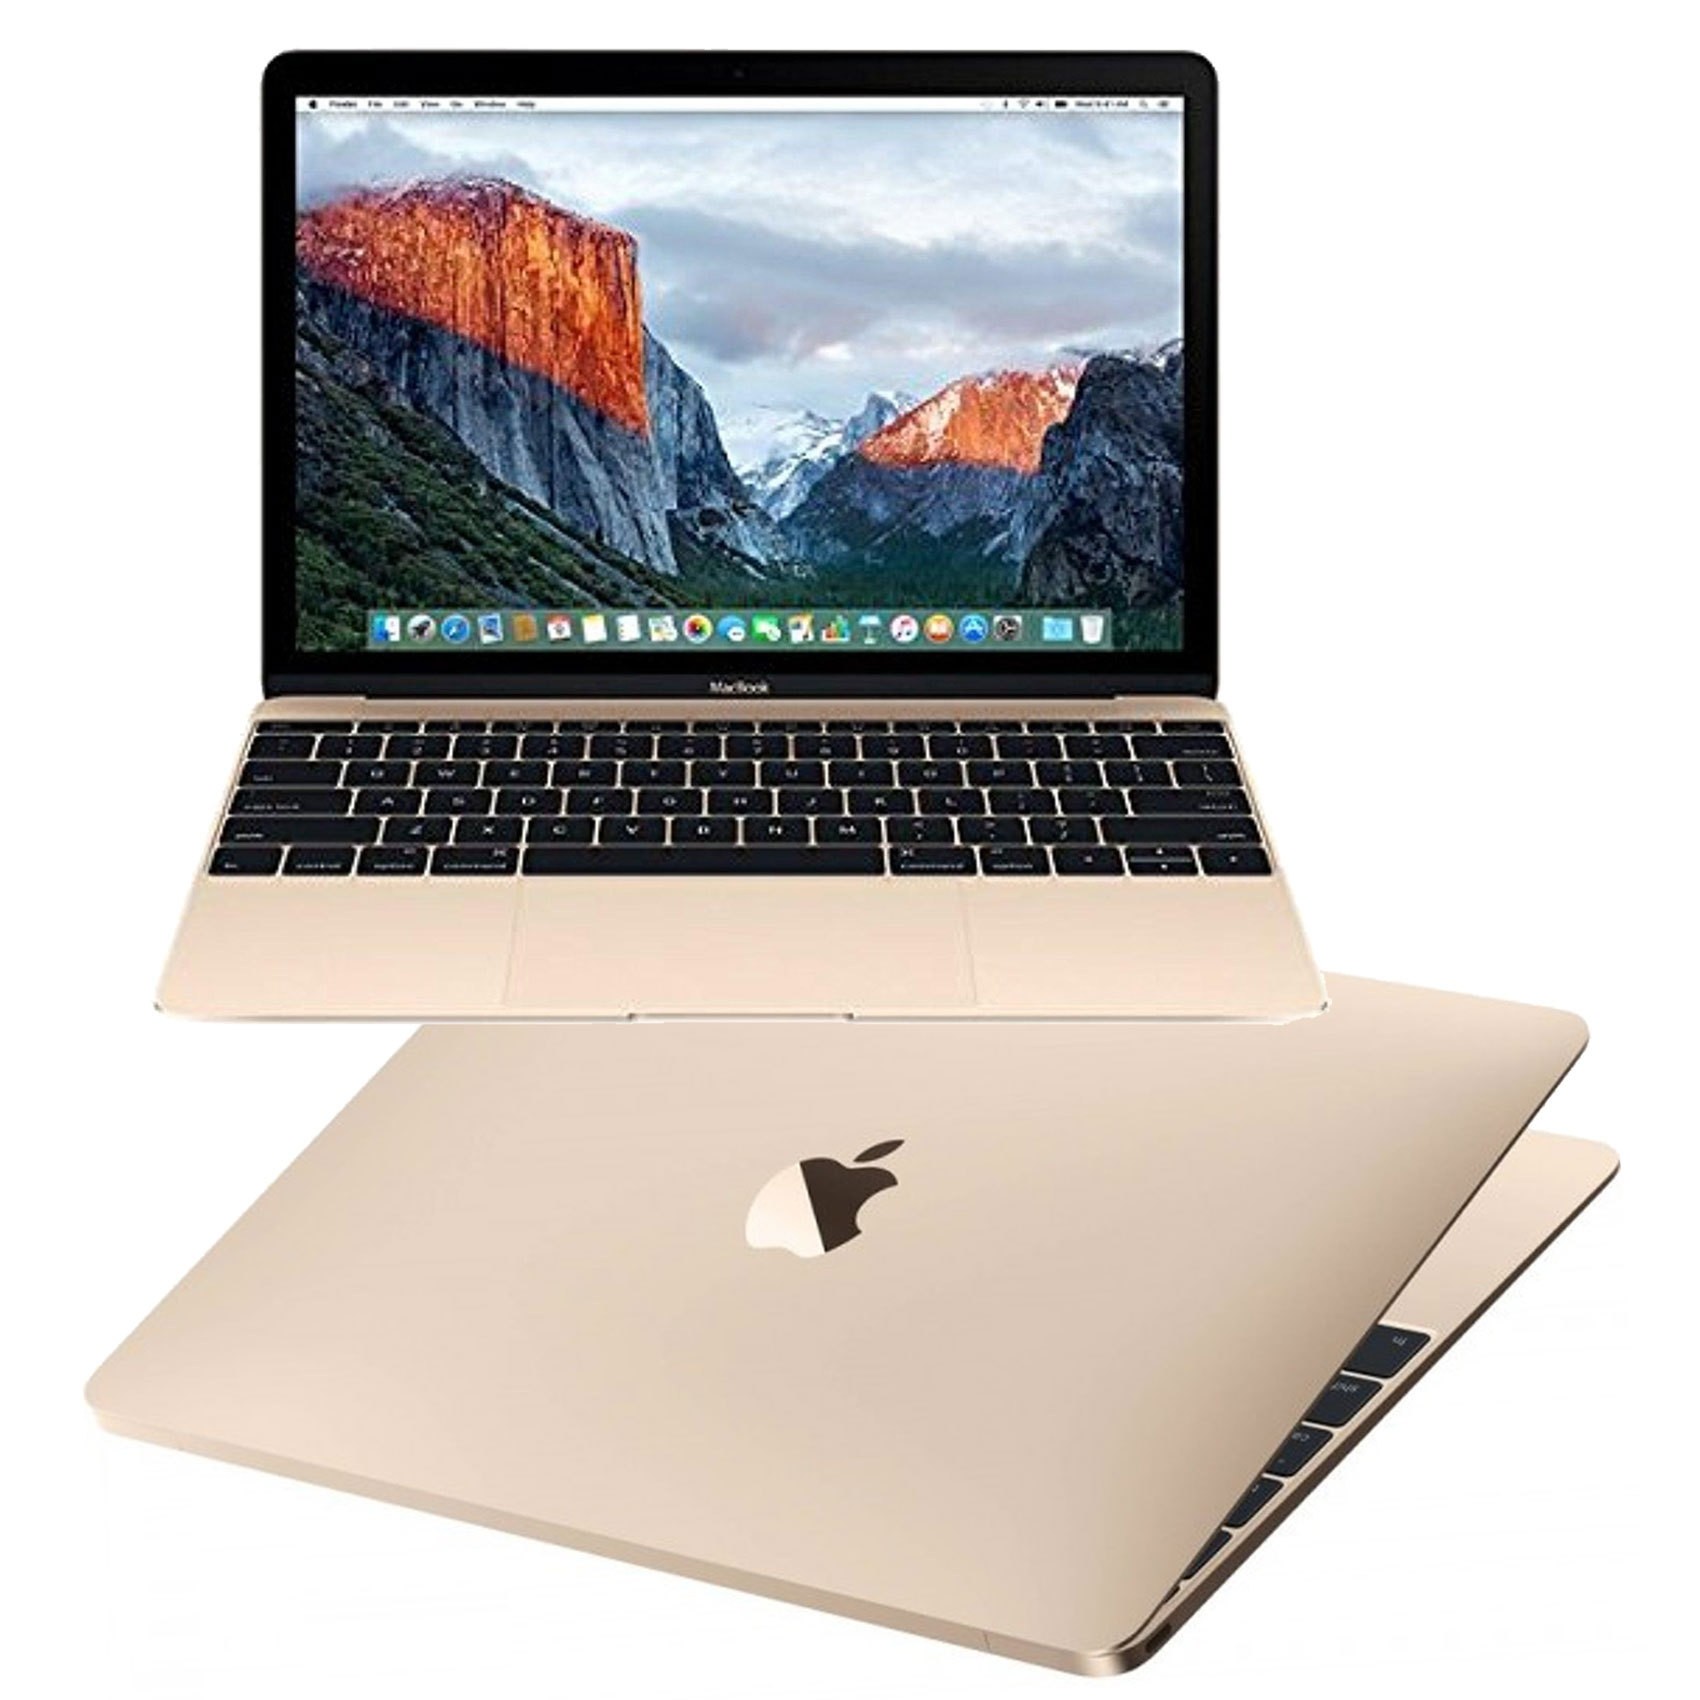 apple macbook 12 inches 2016